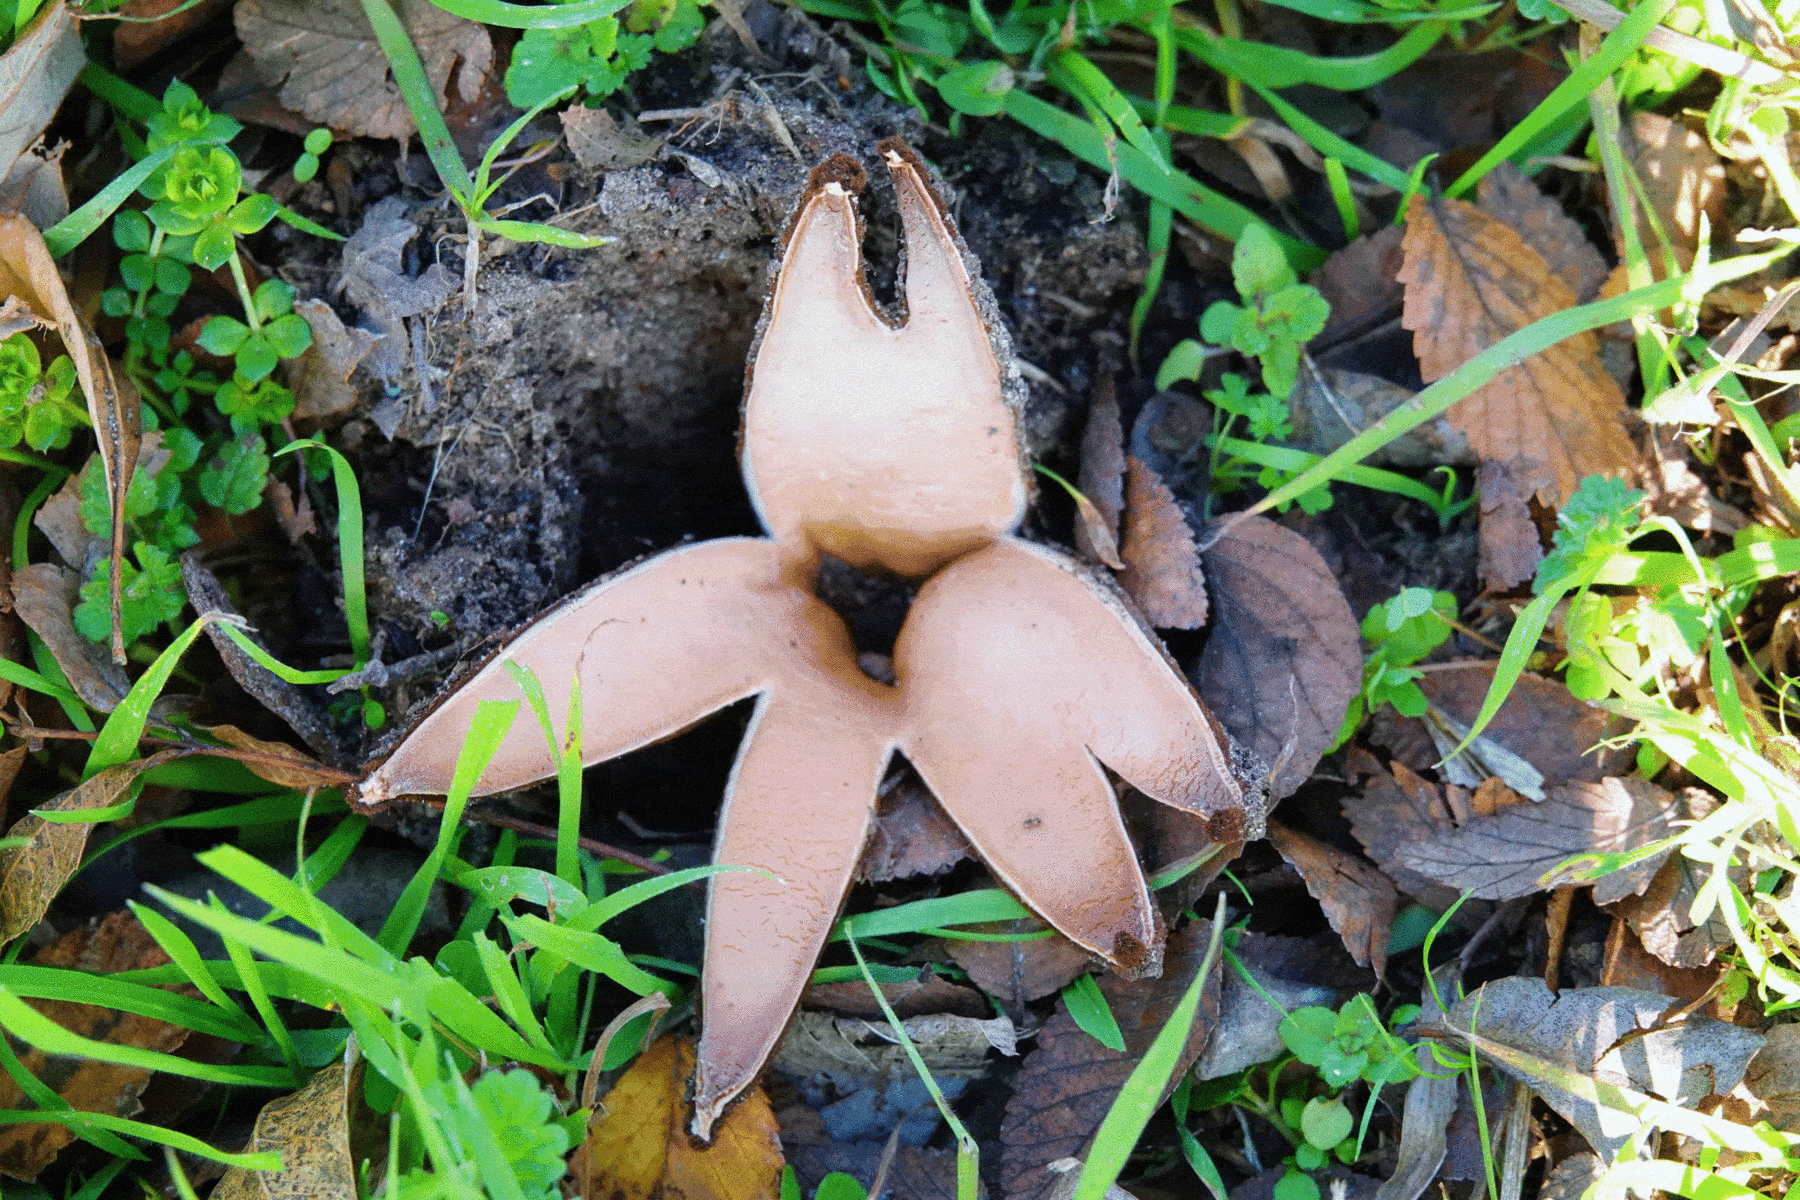 Texas Star Mushroom